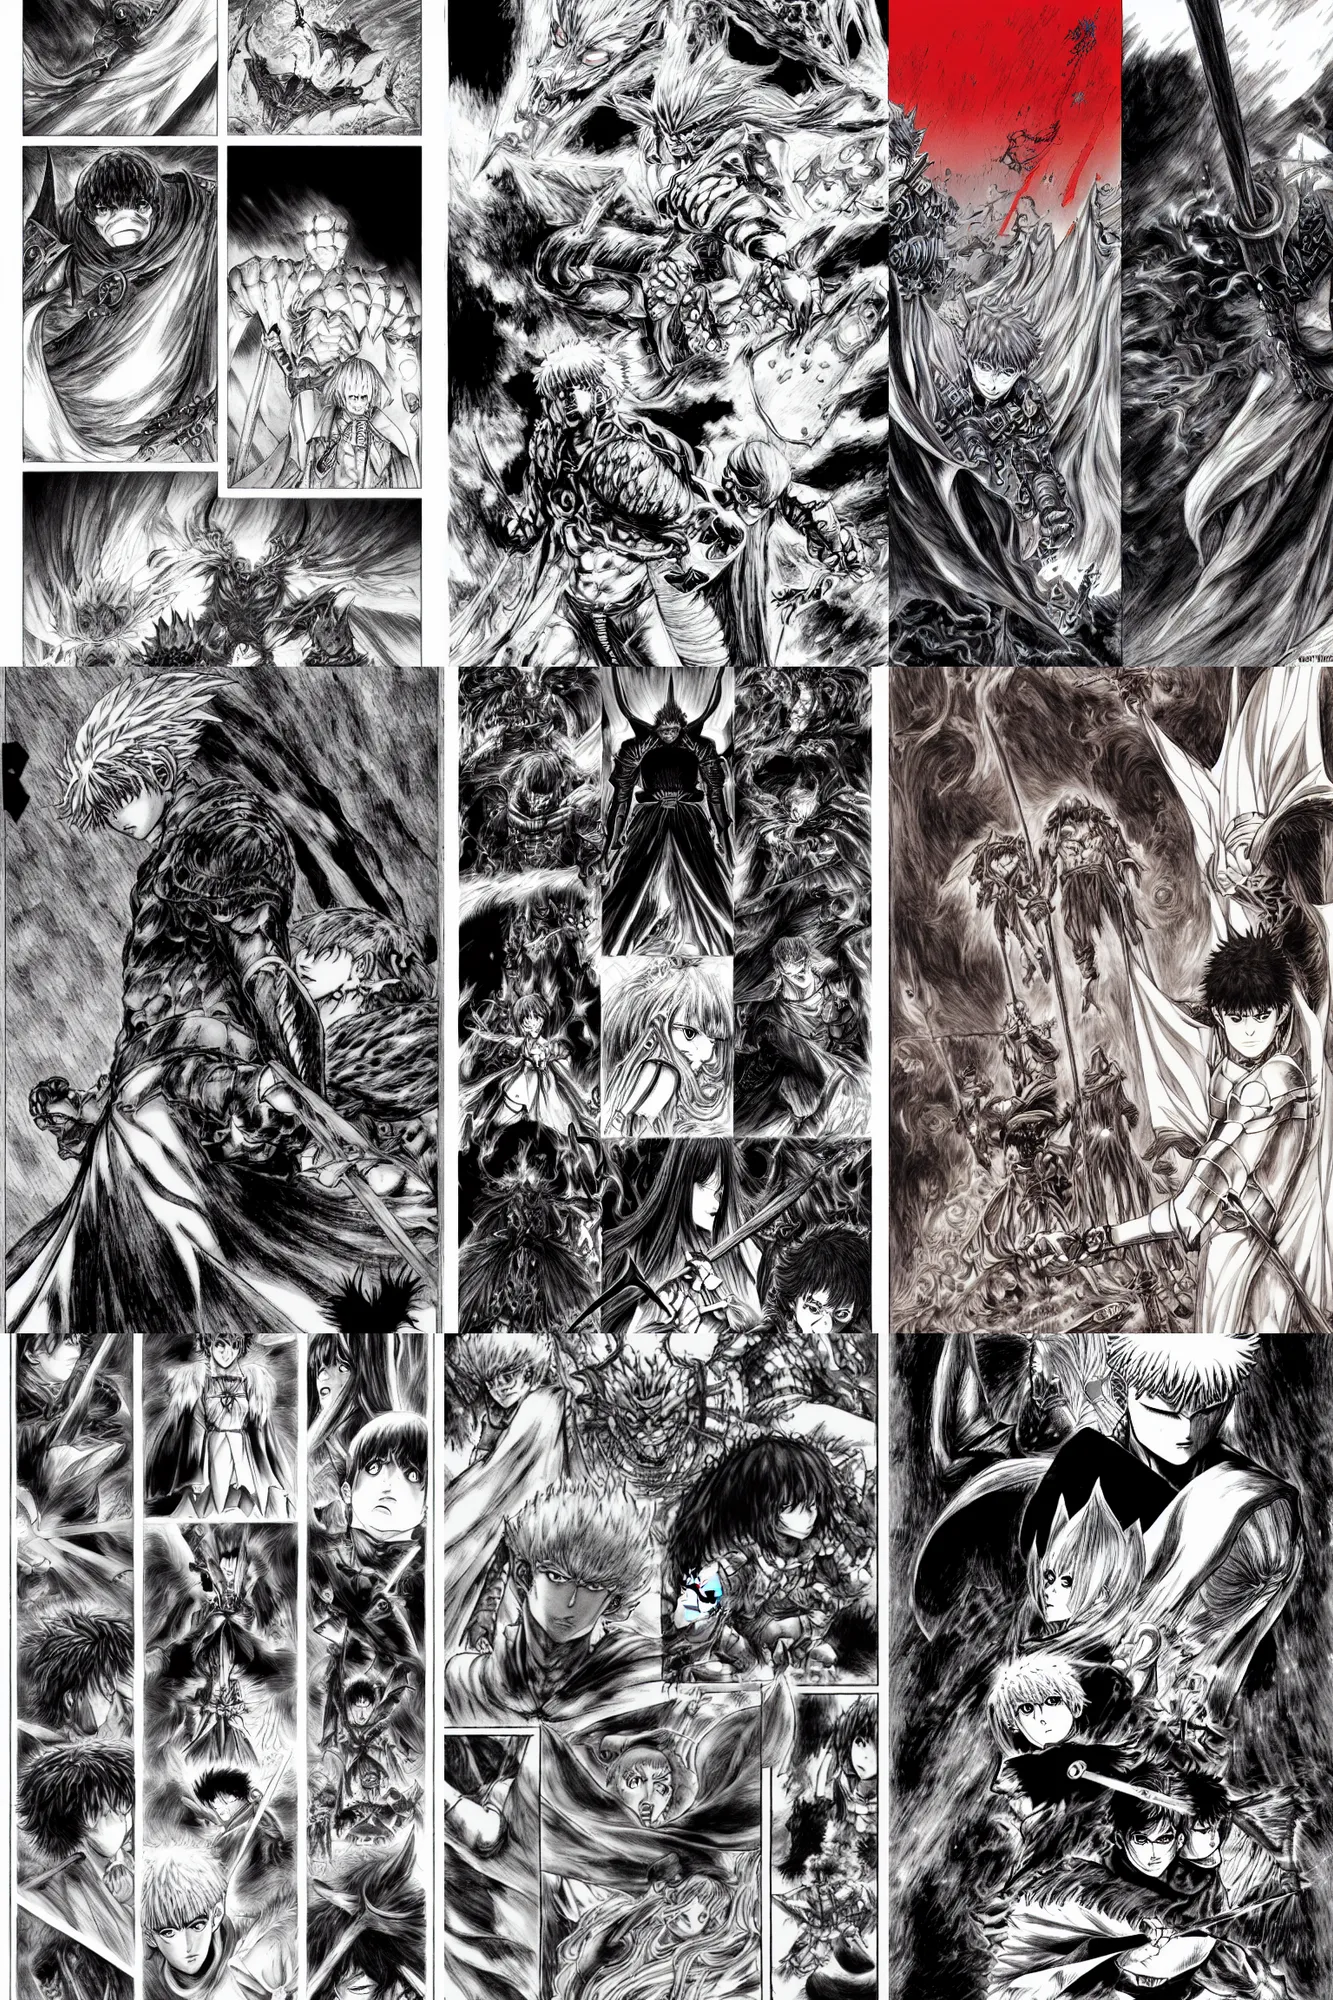 berserk manga pages by kentaro muira, Stable Diffusion